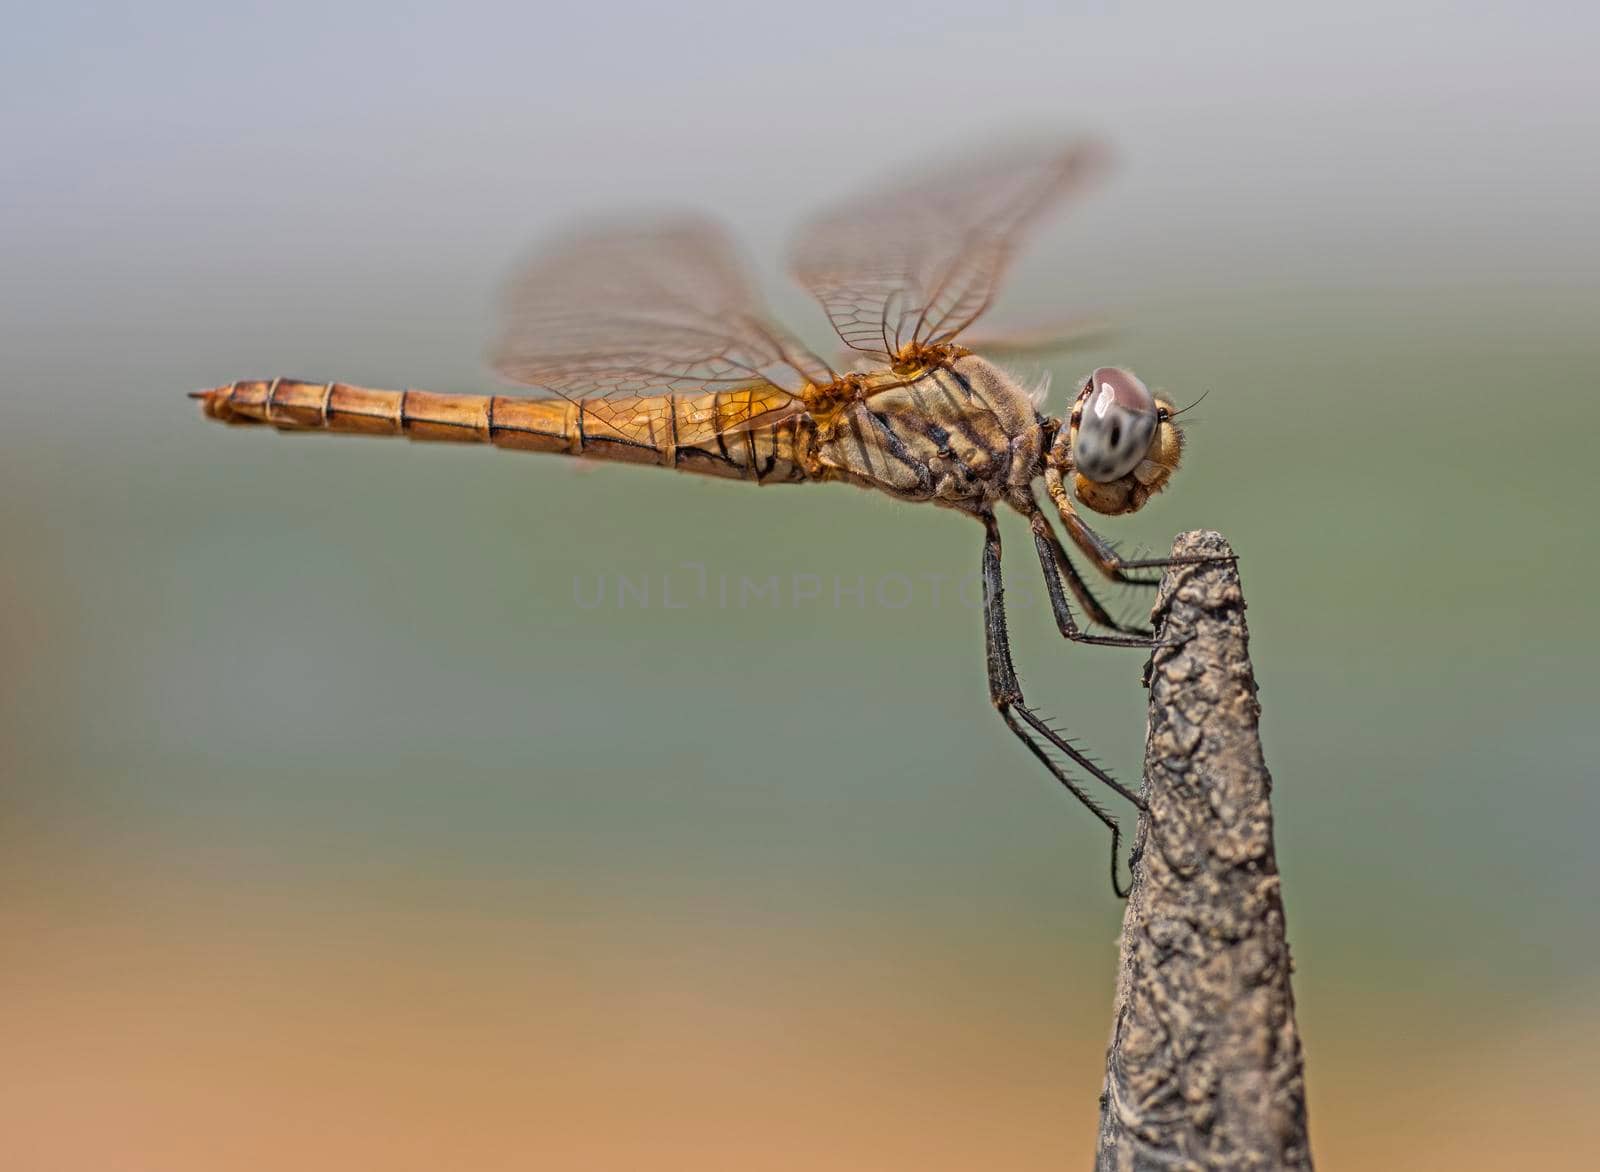 Closeup detail of wandering glider dragonfly on metal post by paulvinten